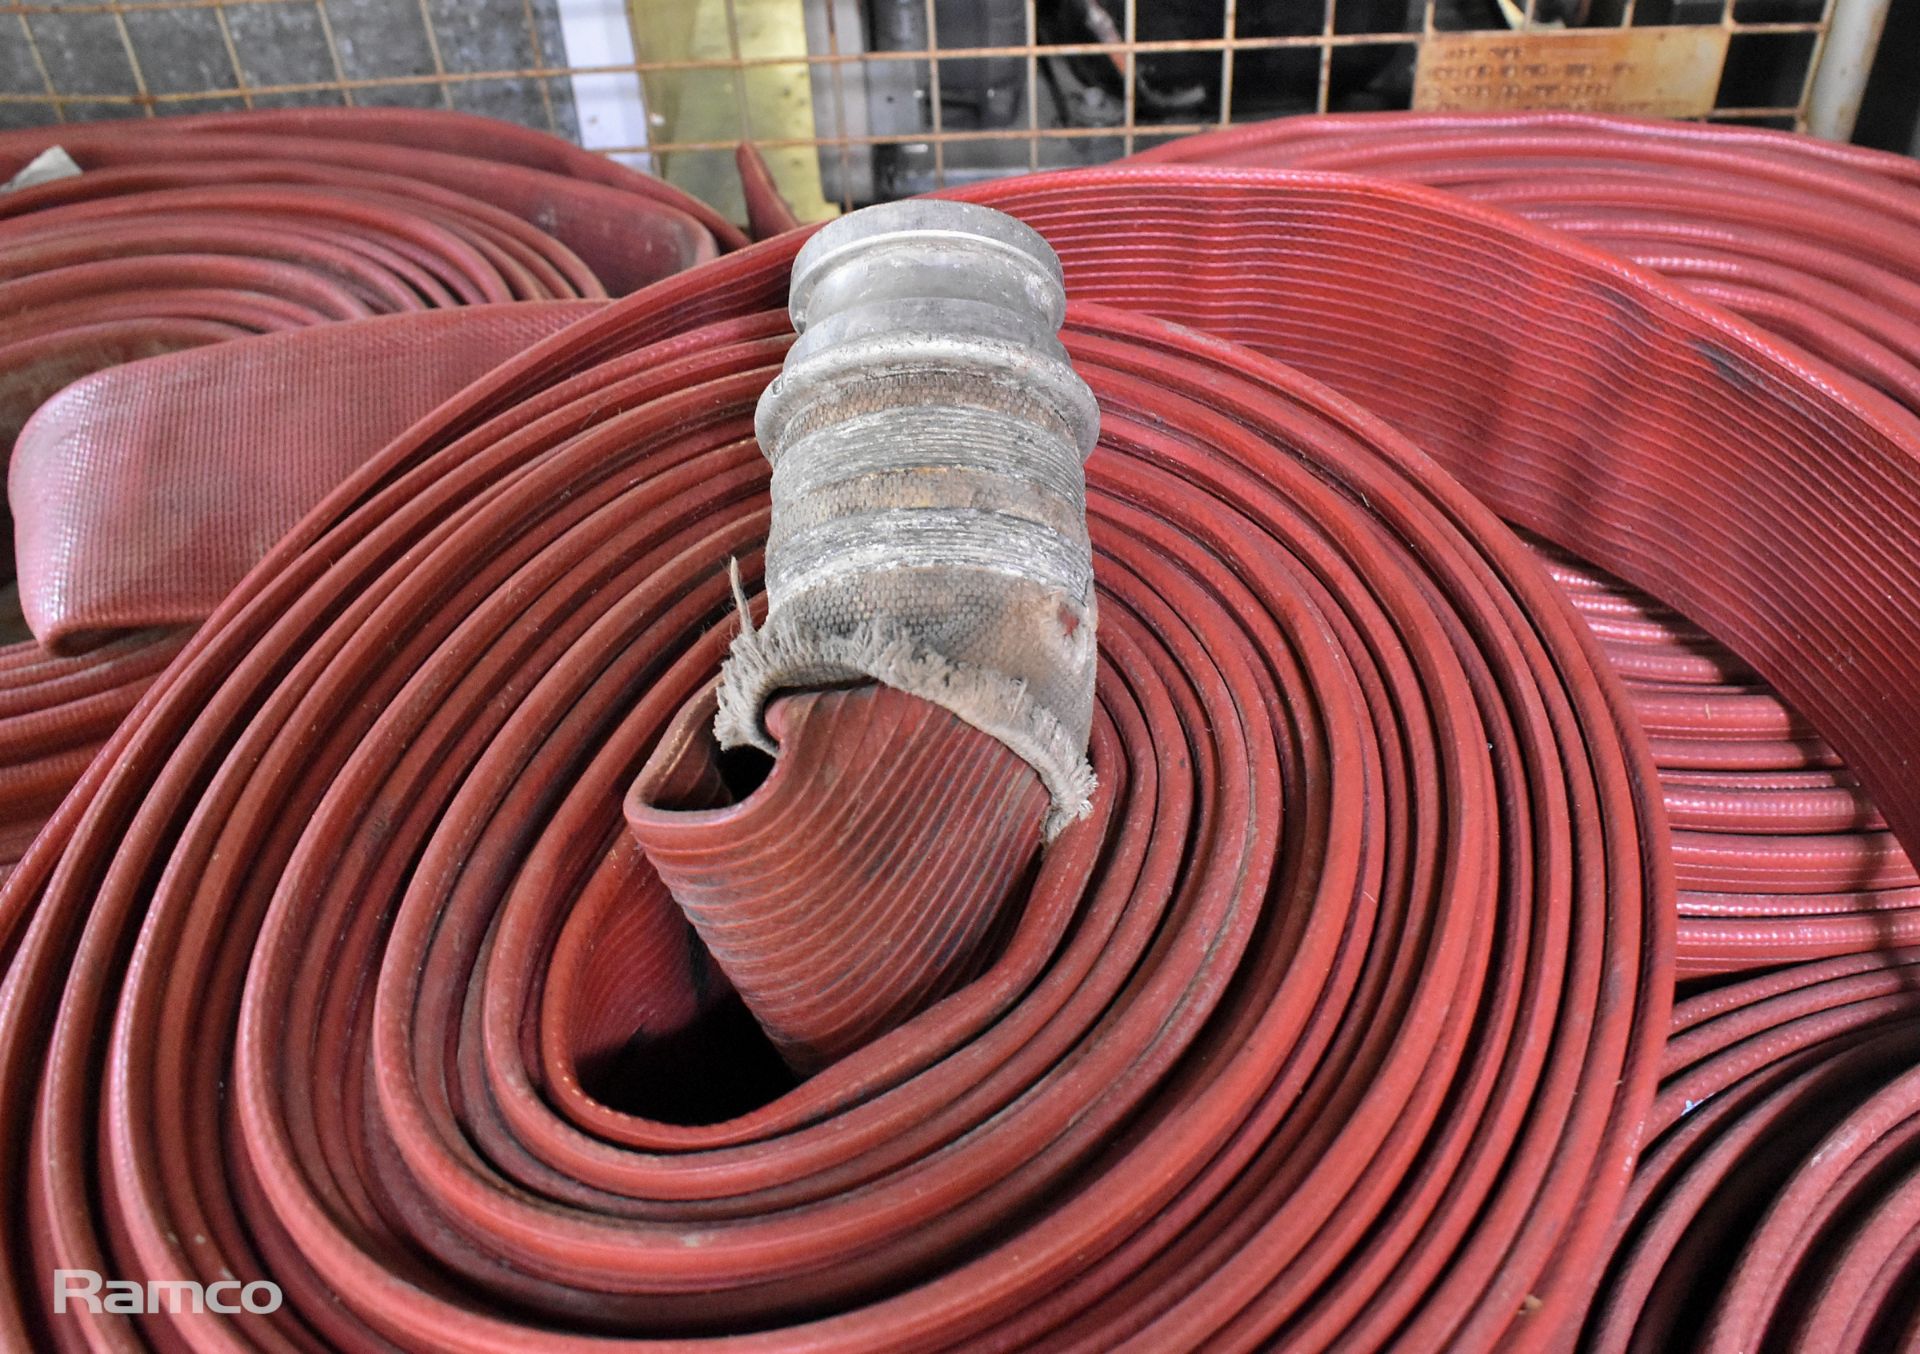 5x Layflat hose assemblies - Image 3 of 3